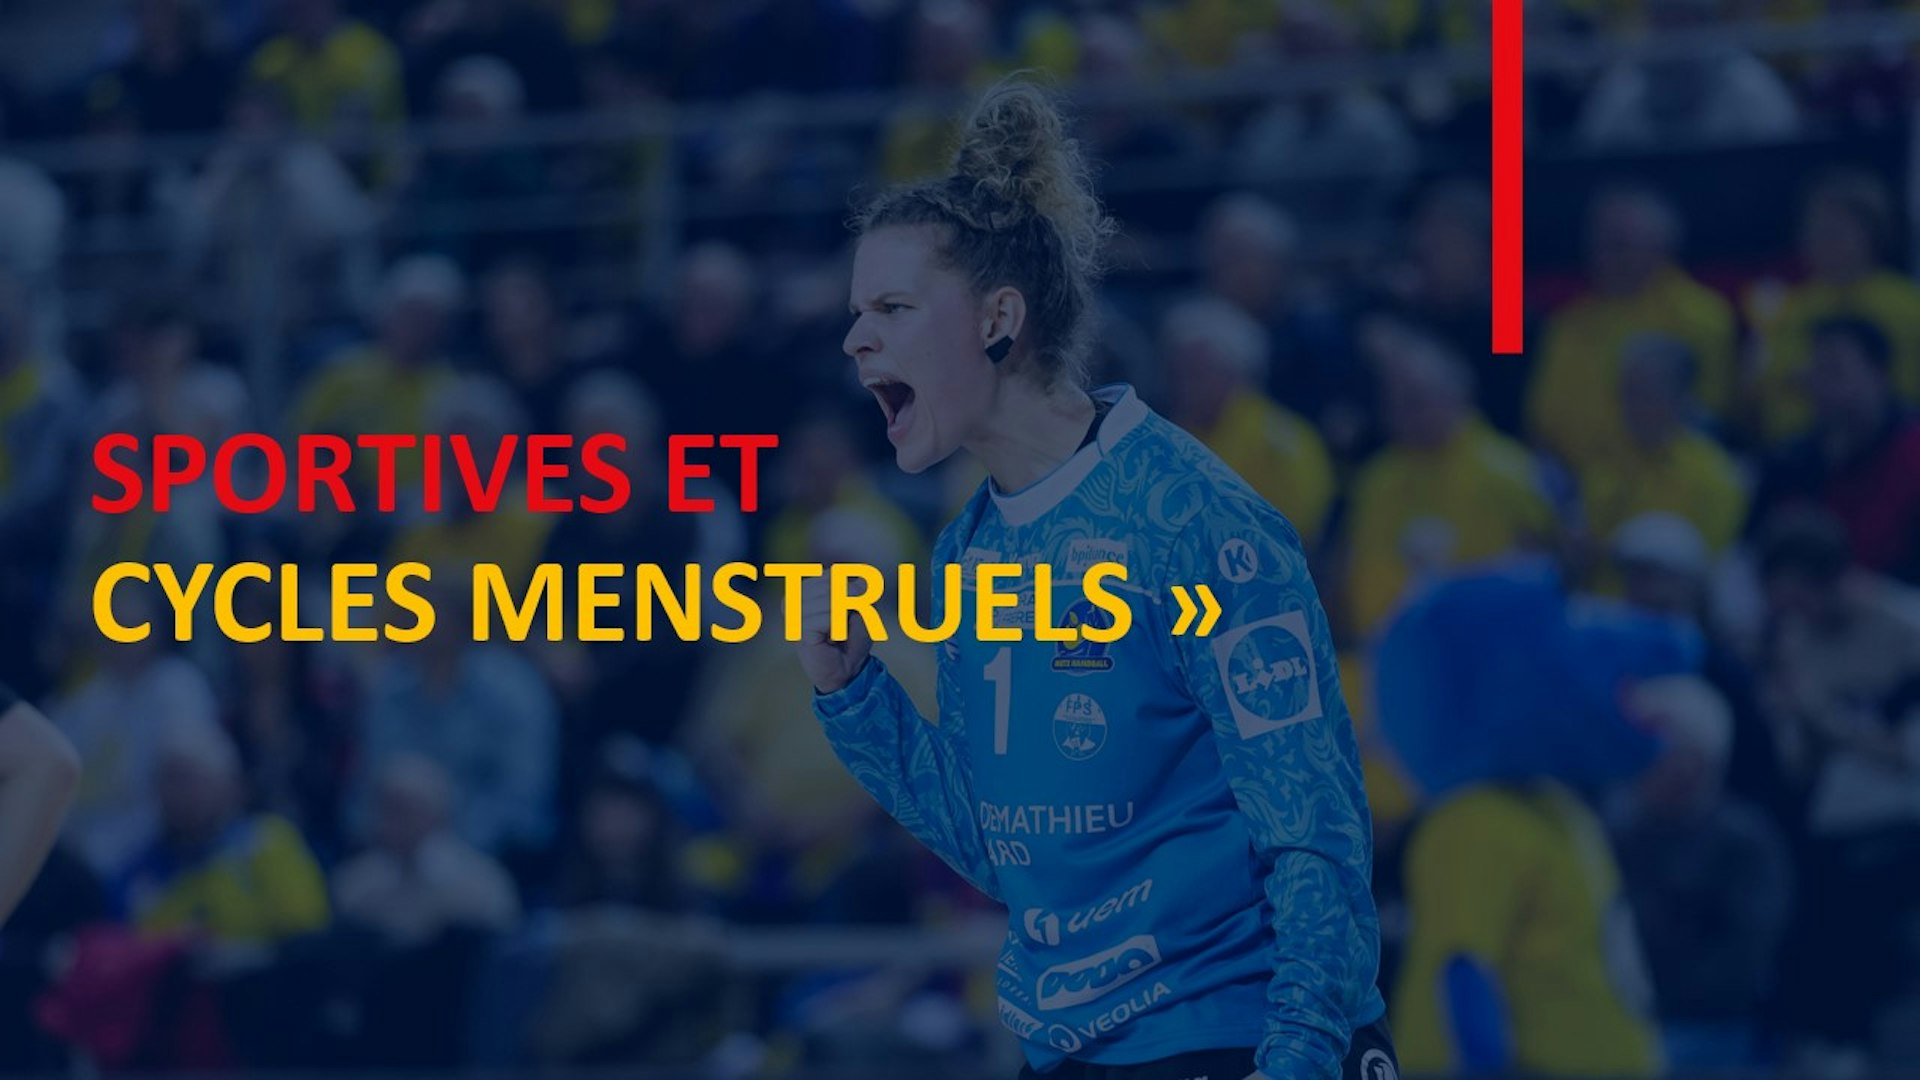 Sportives et Cycles menstruels - Metz Handball